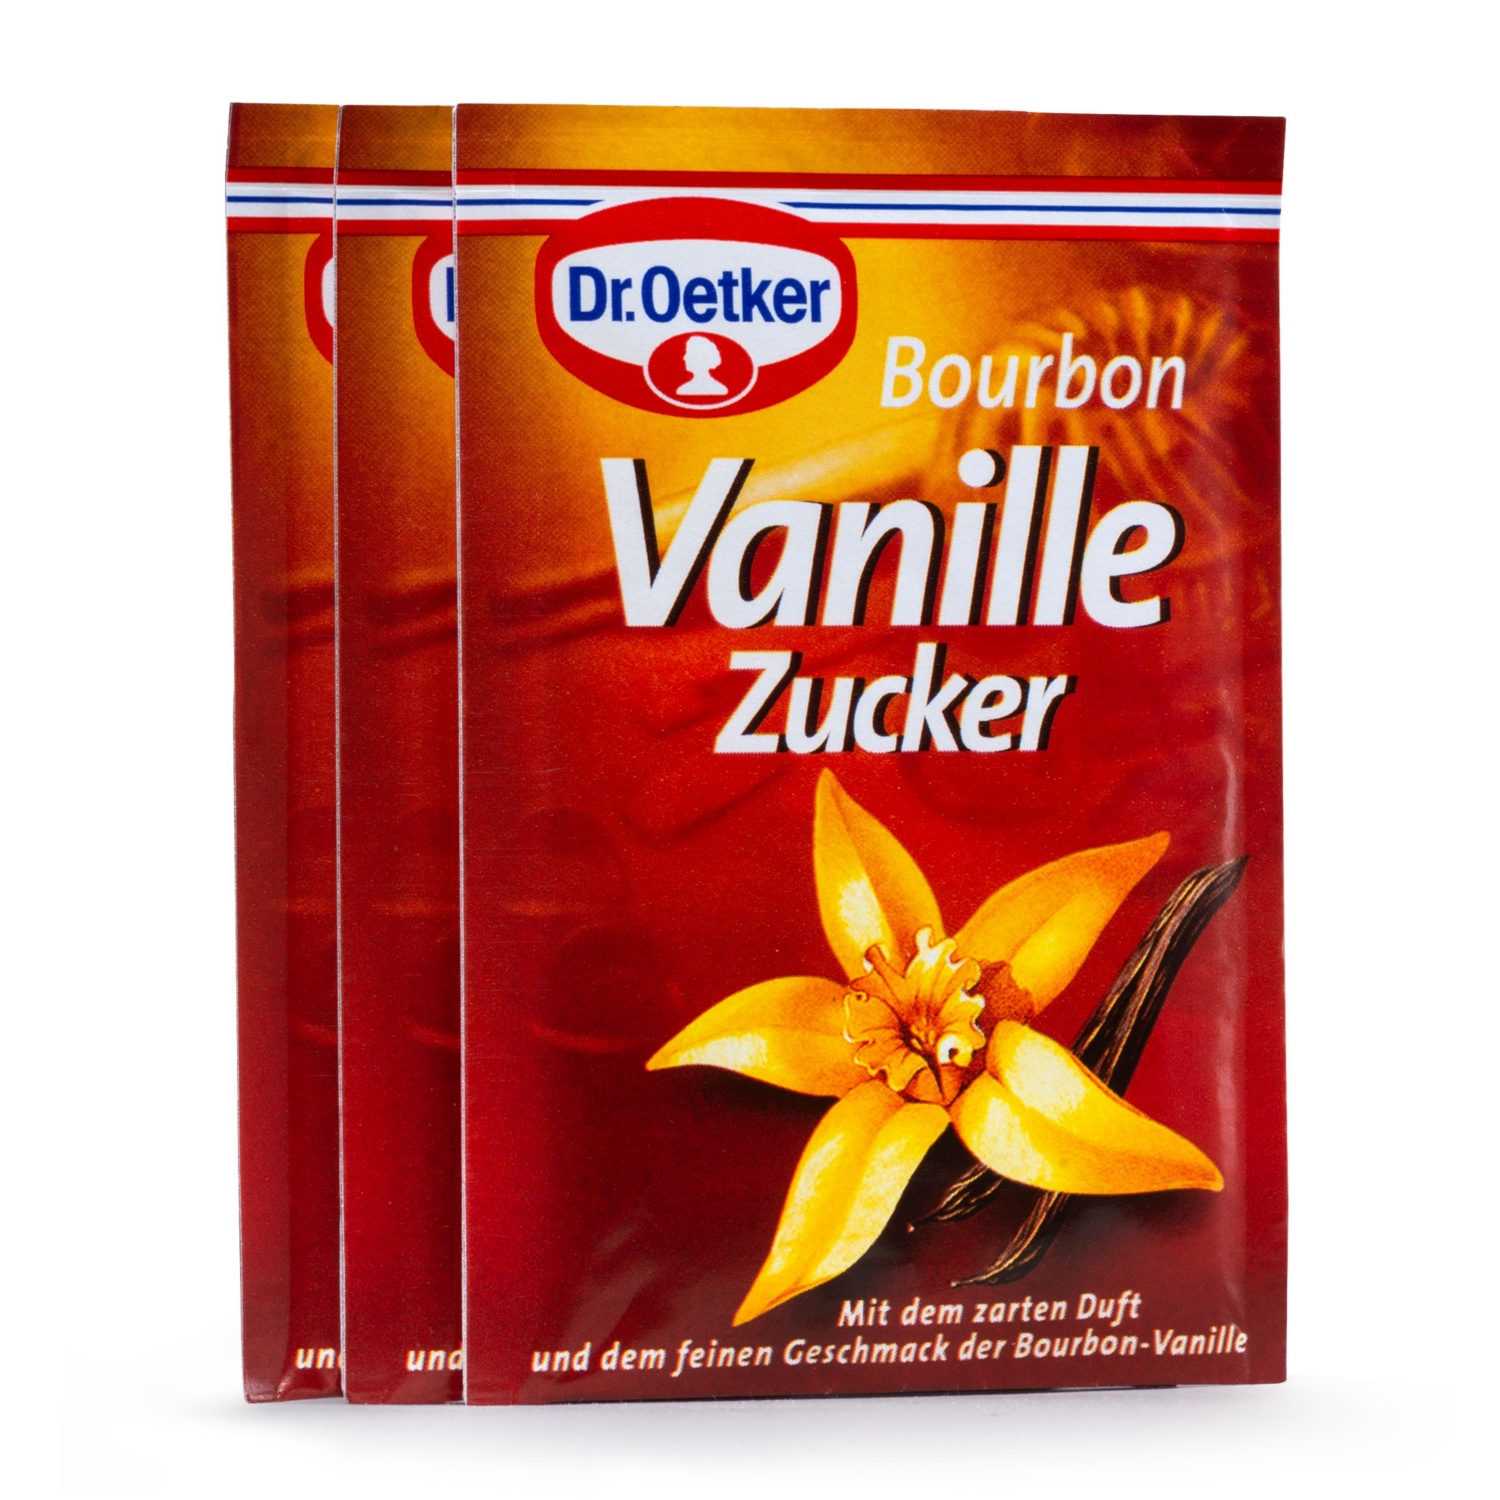 DR. OETKER Bourbon Vanille-Zucker